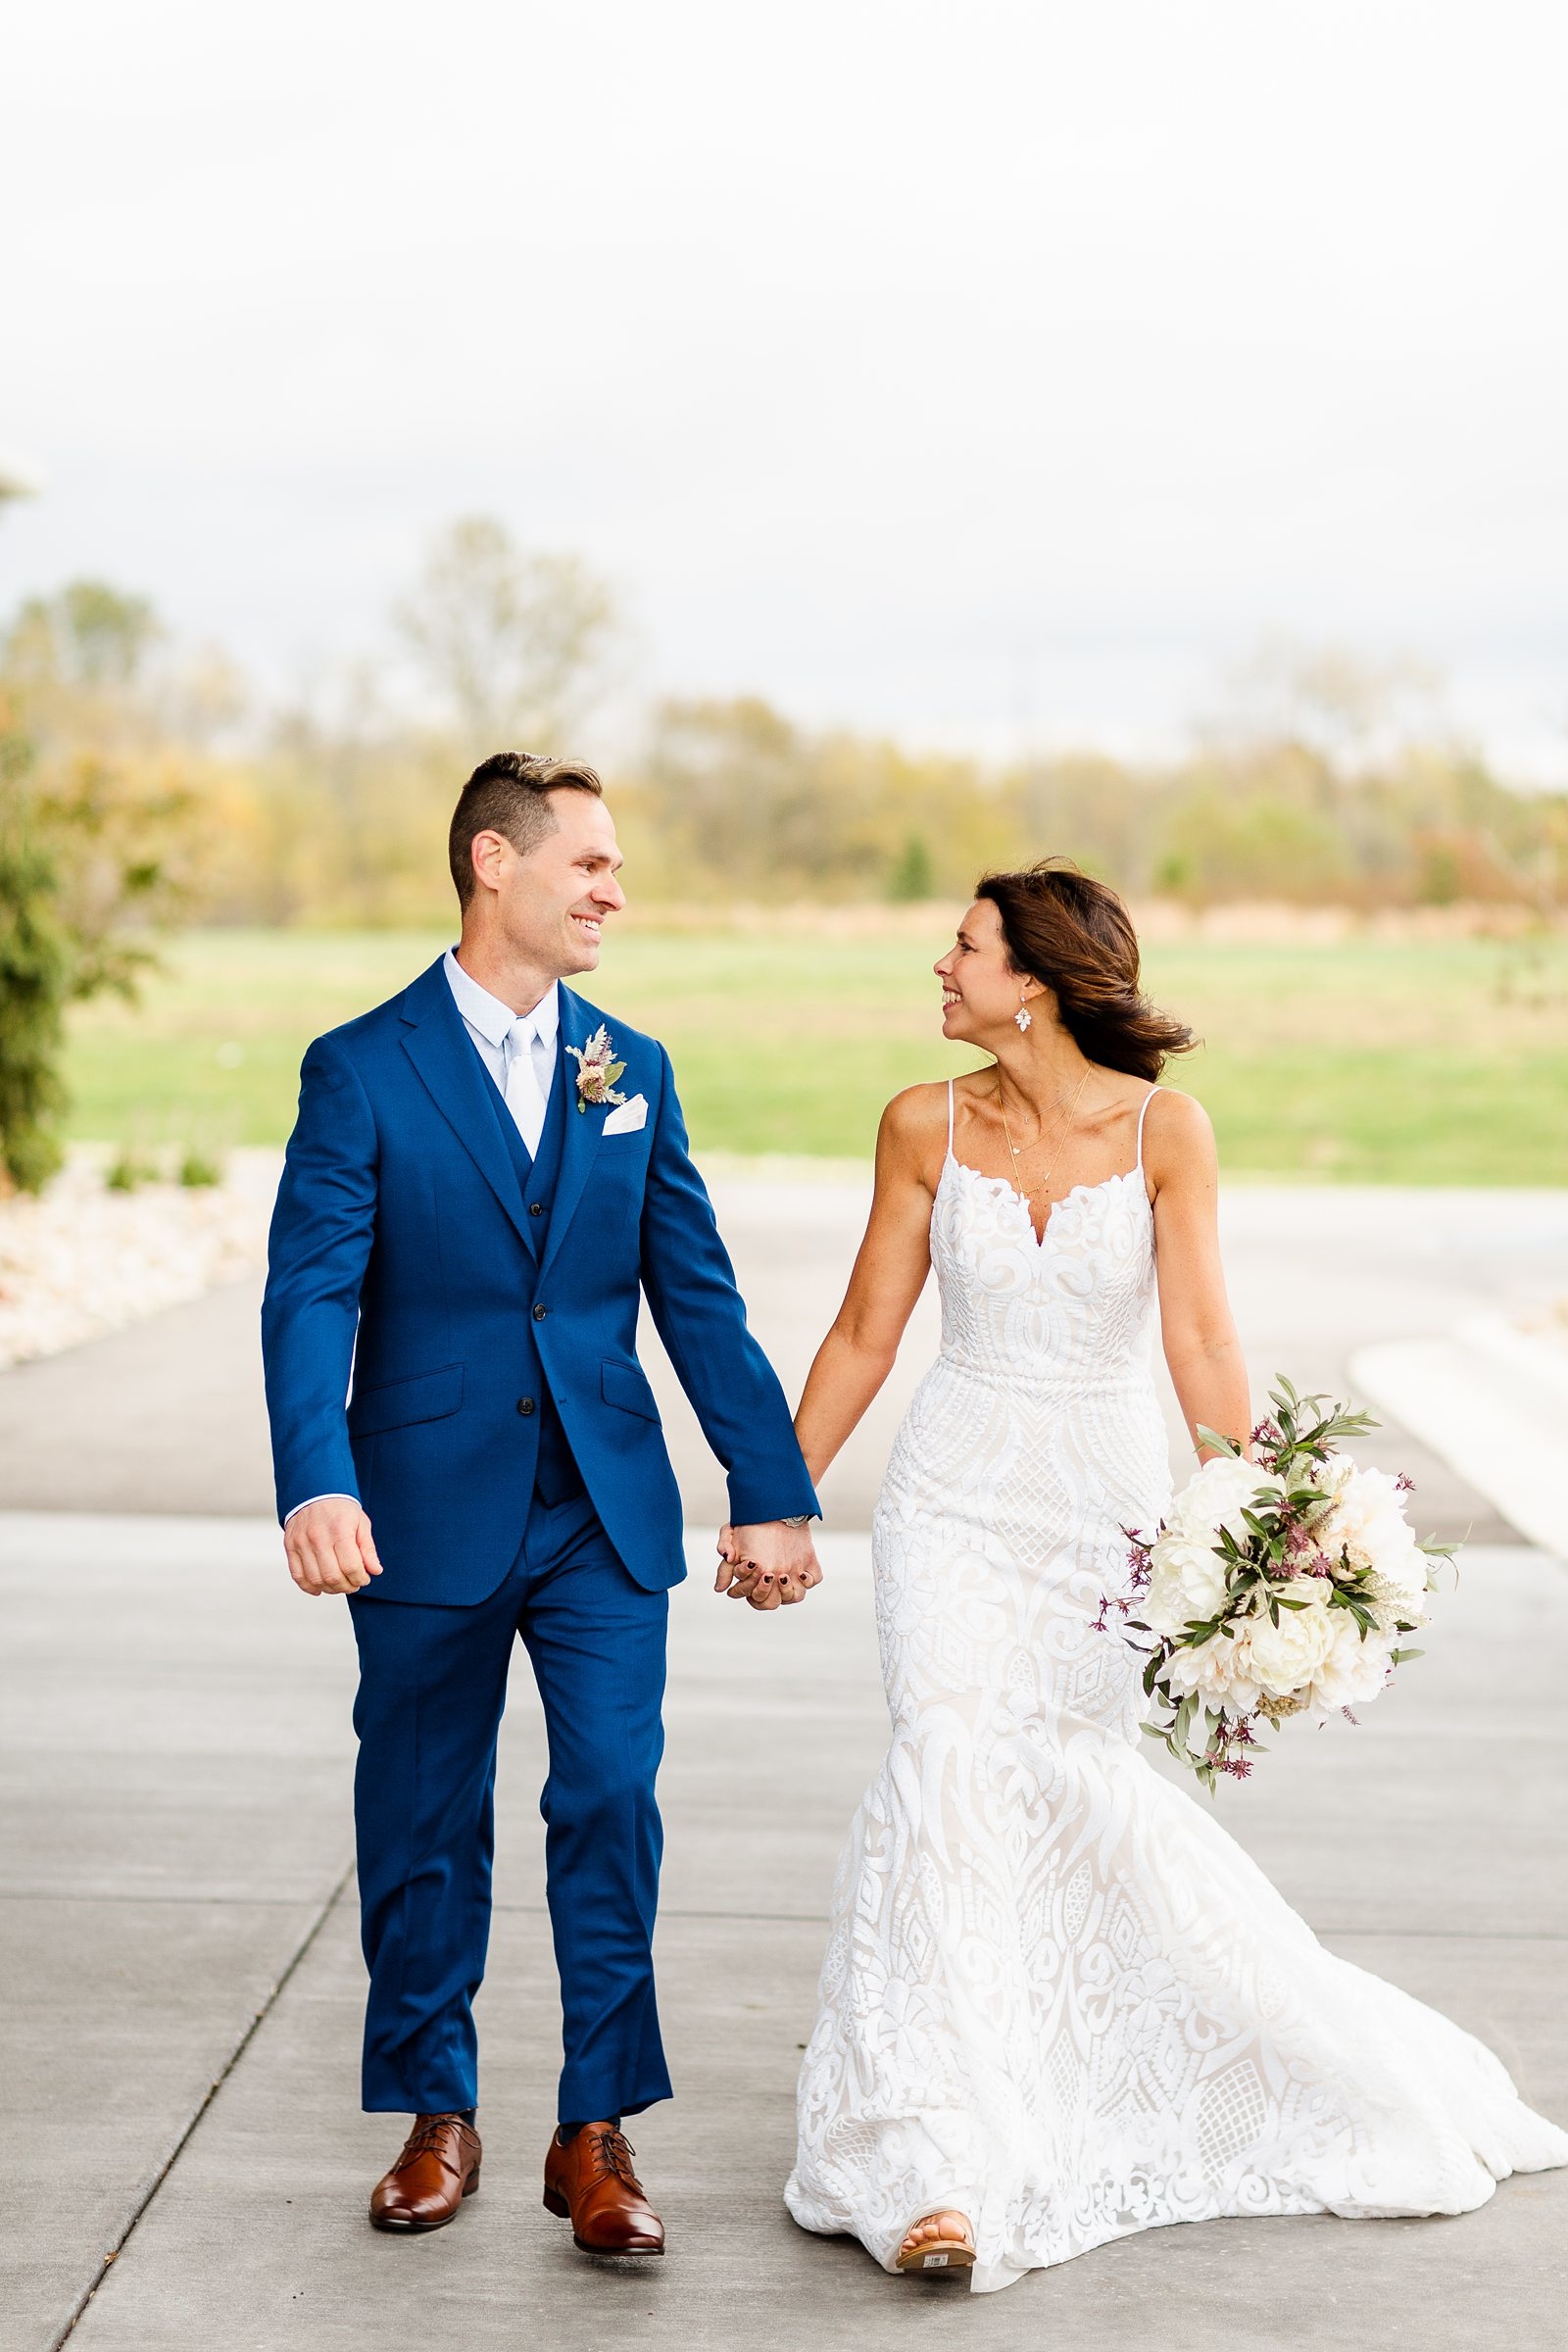 Cindy and Eric's Friedman Park Wedding Bret and Brandie Photography | Evansville Indiana Wedding Photographers_0053.jpg